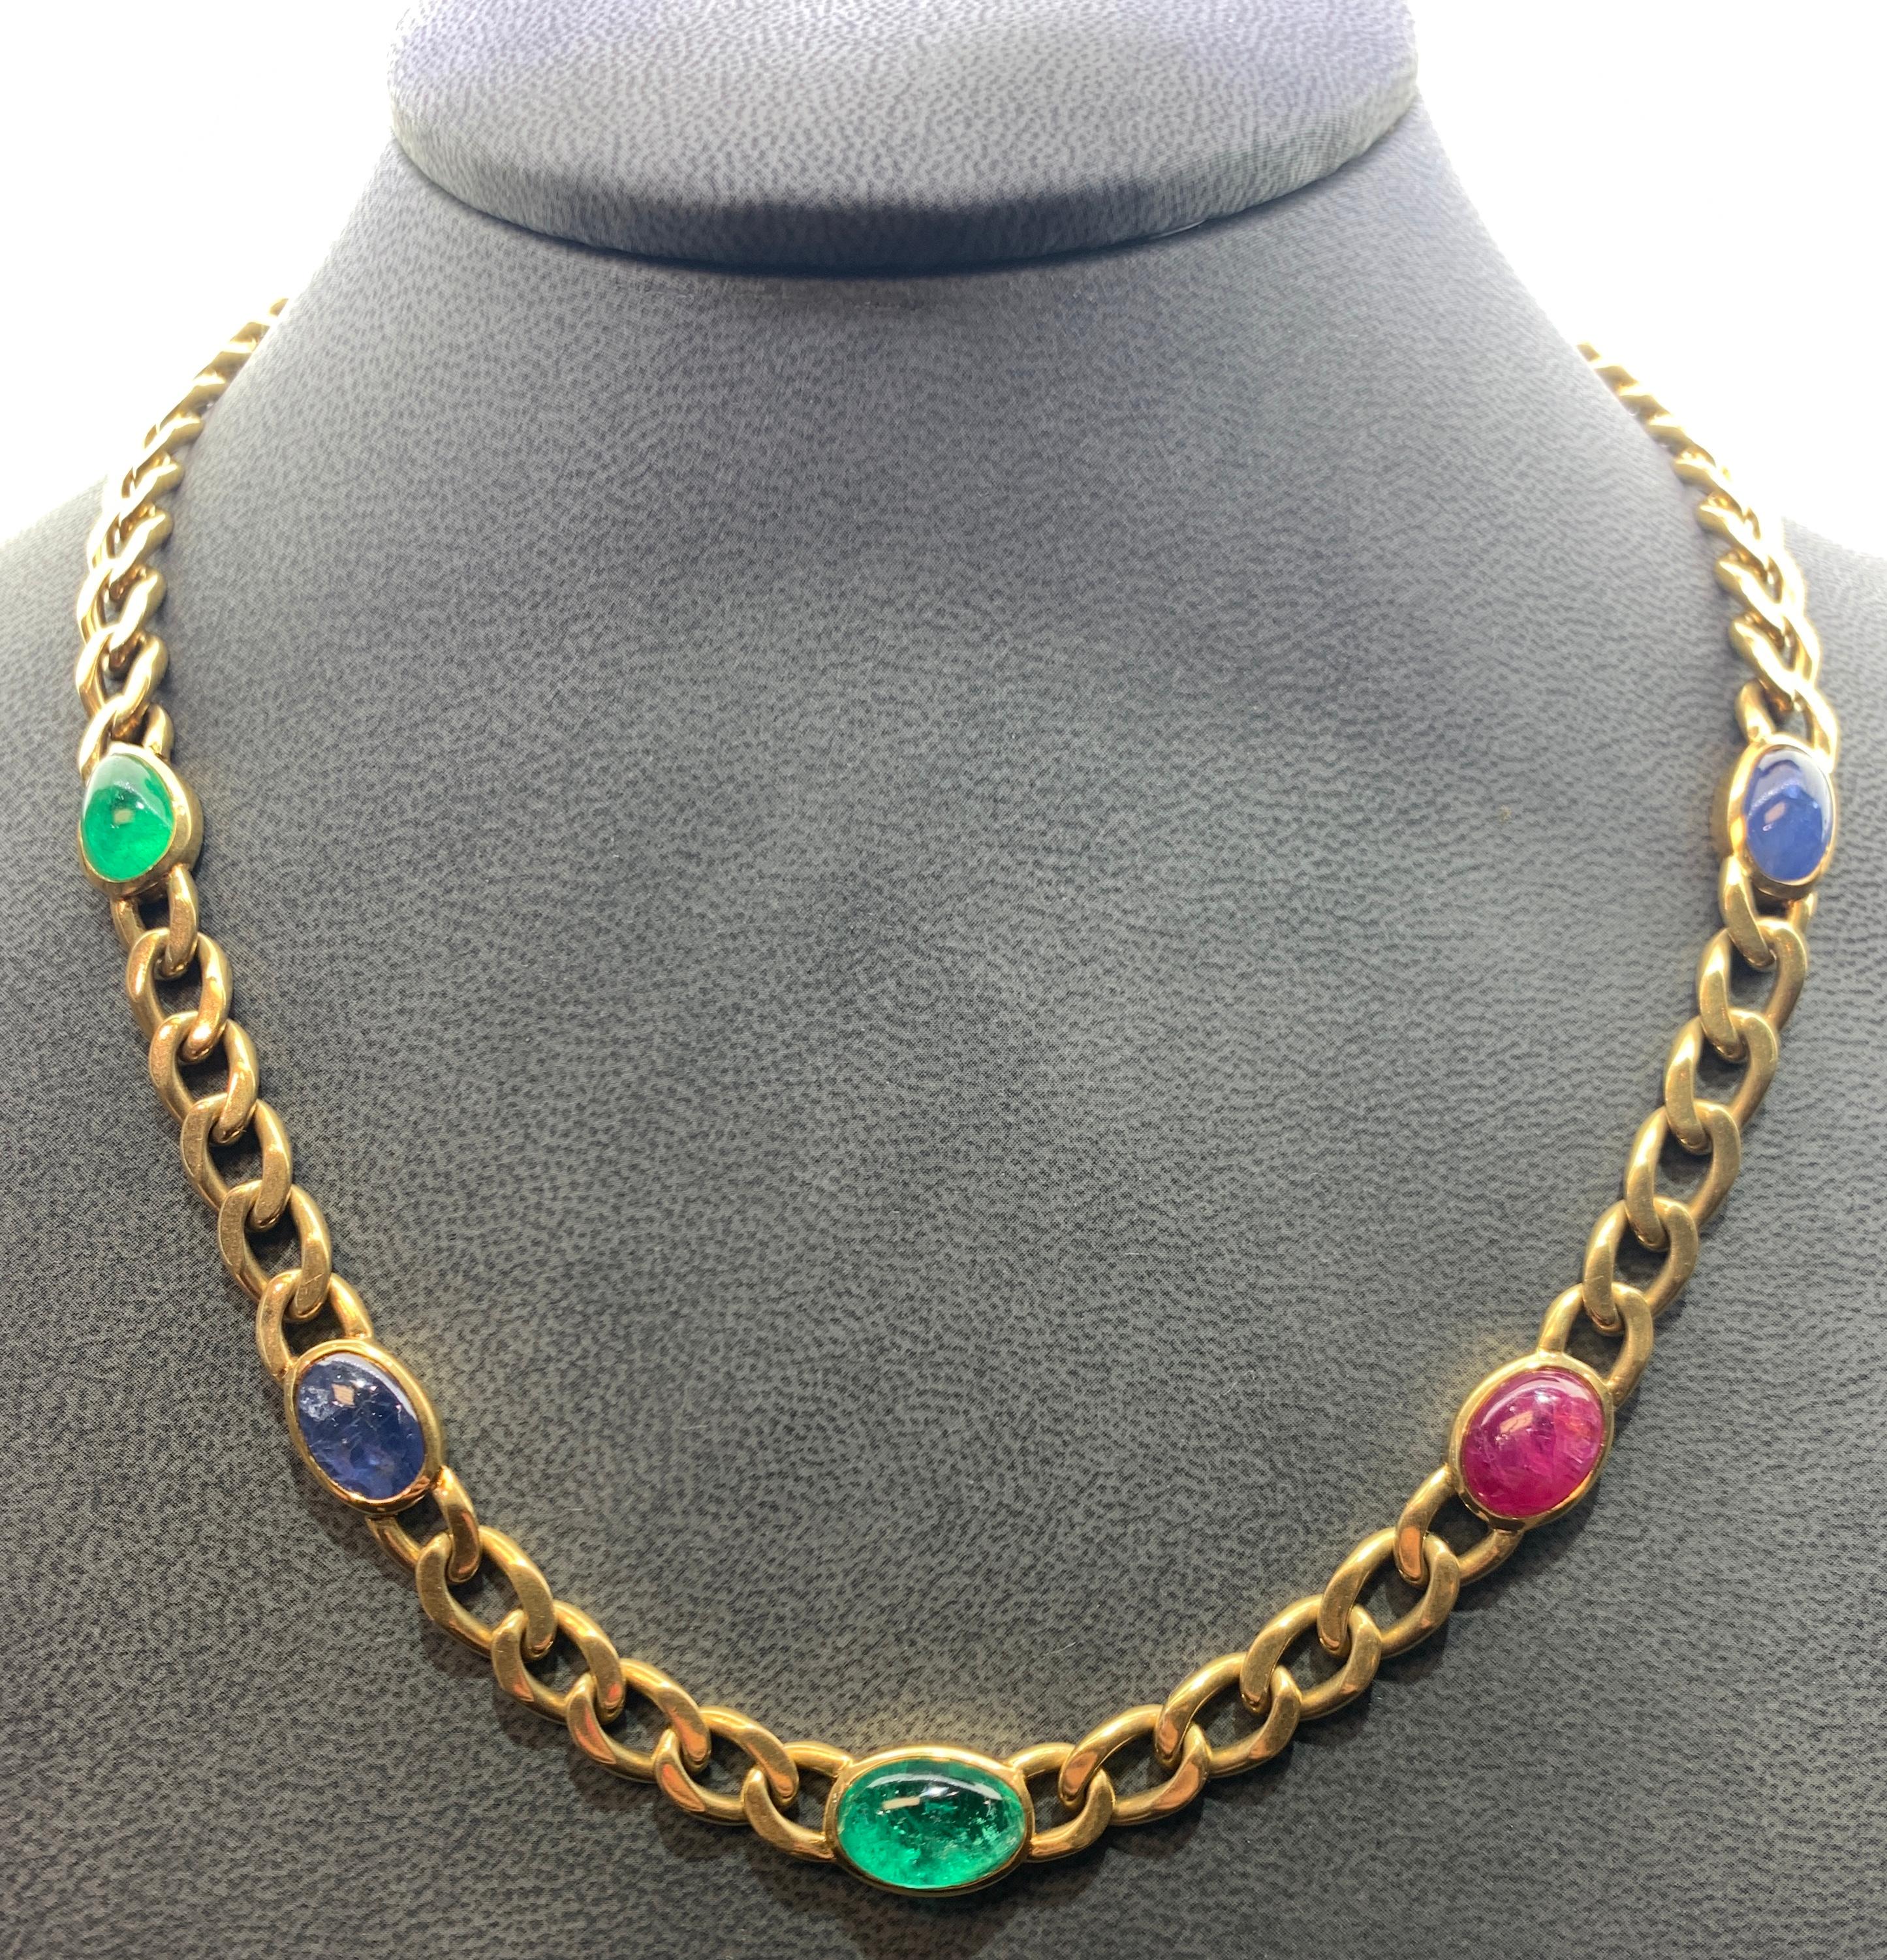 David Webb Cabochon Multi Gem Link Necklace
2 sapphires
2 emeralds 
1 ruby
Measurements:  19